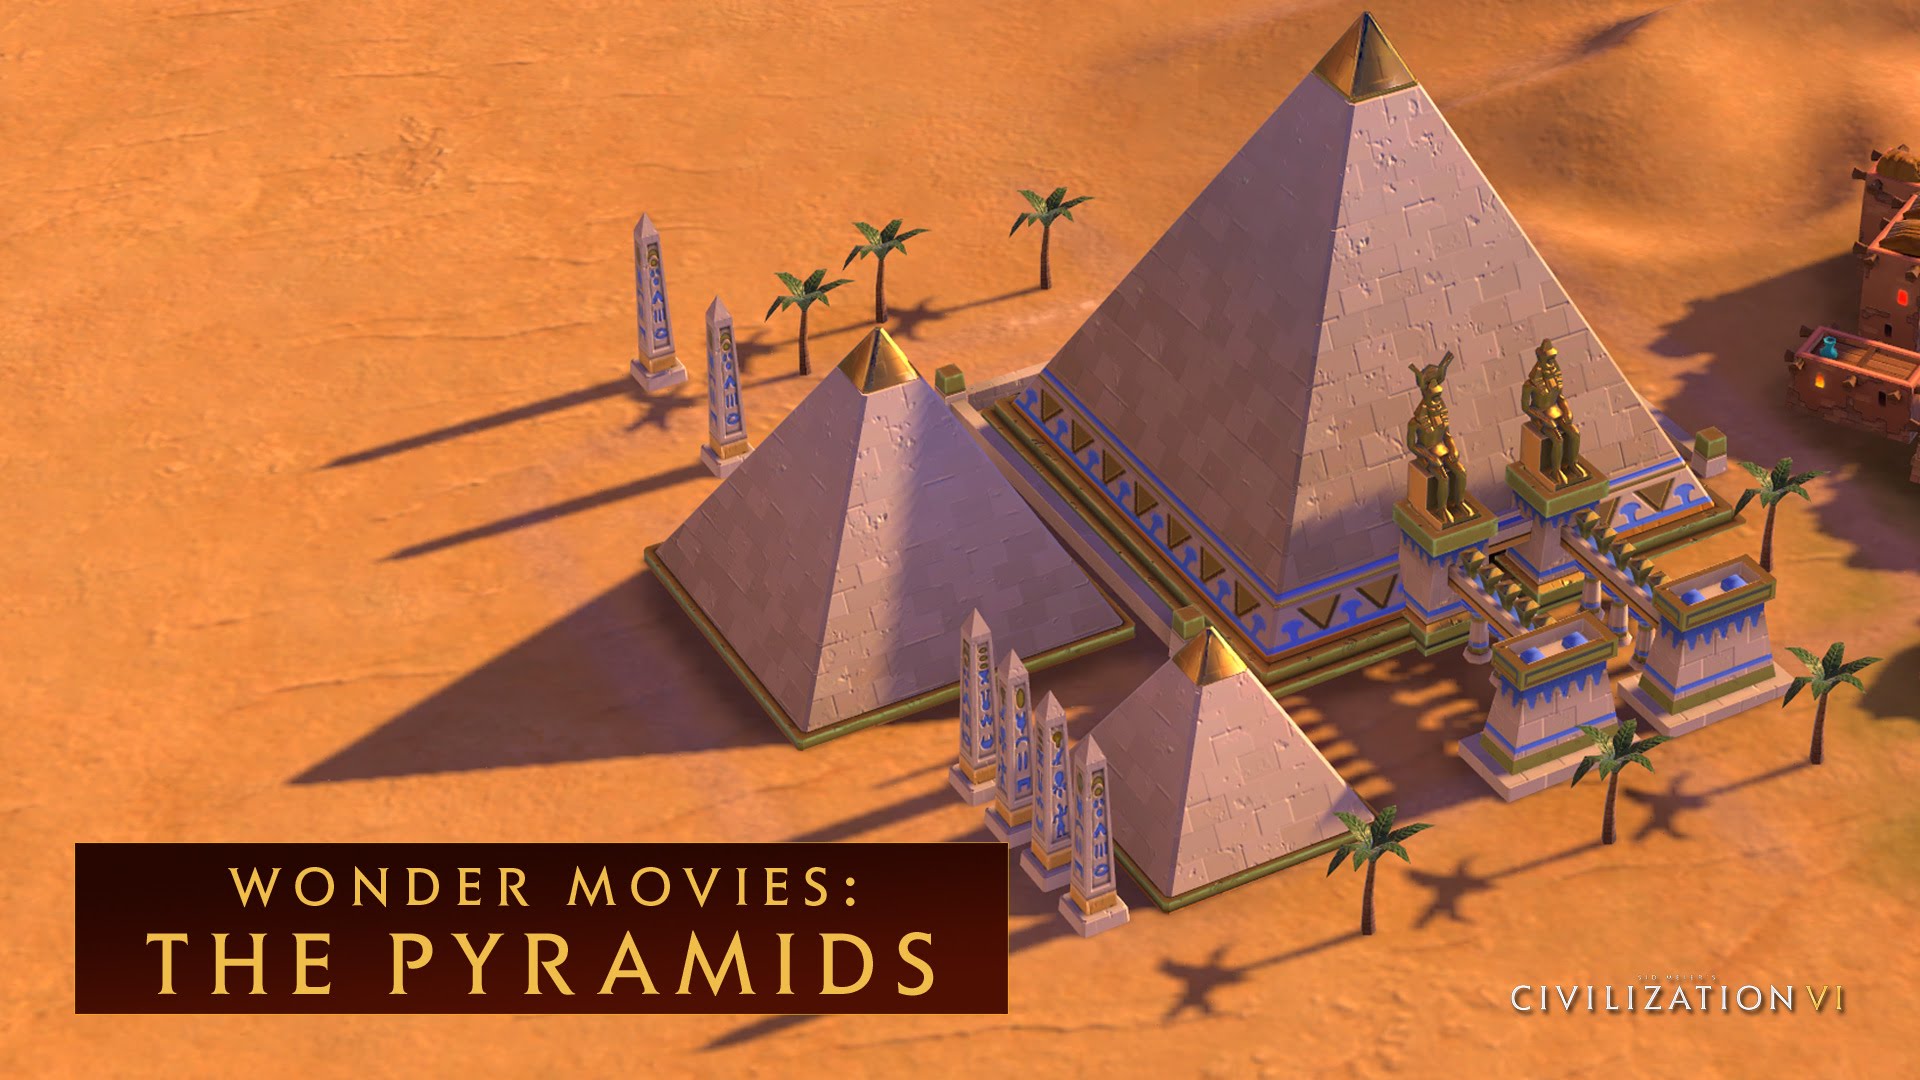 CIVILIZATION VI - The Pyramids (Wonder Movies)